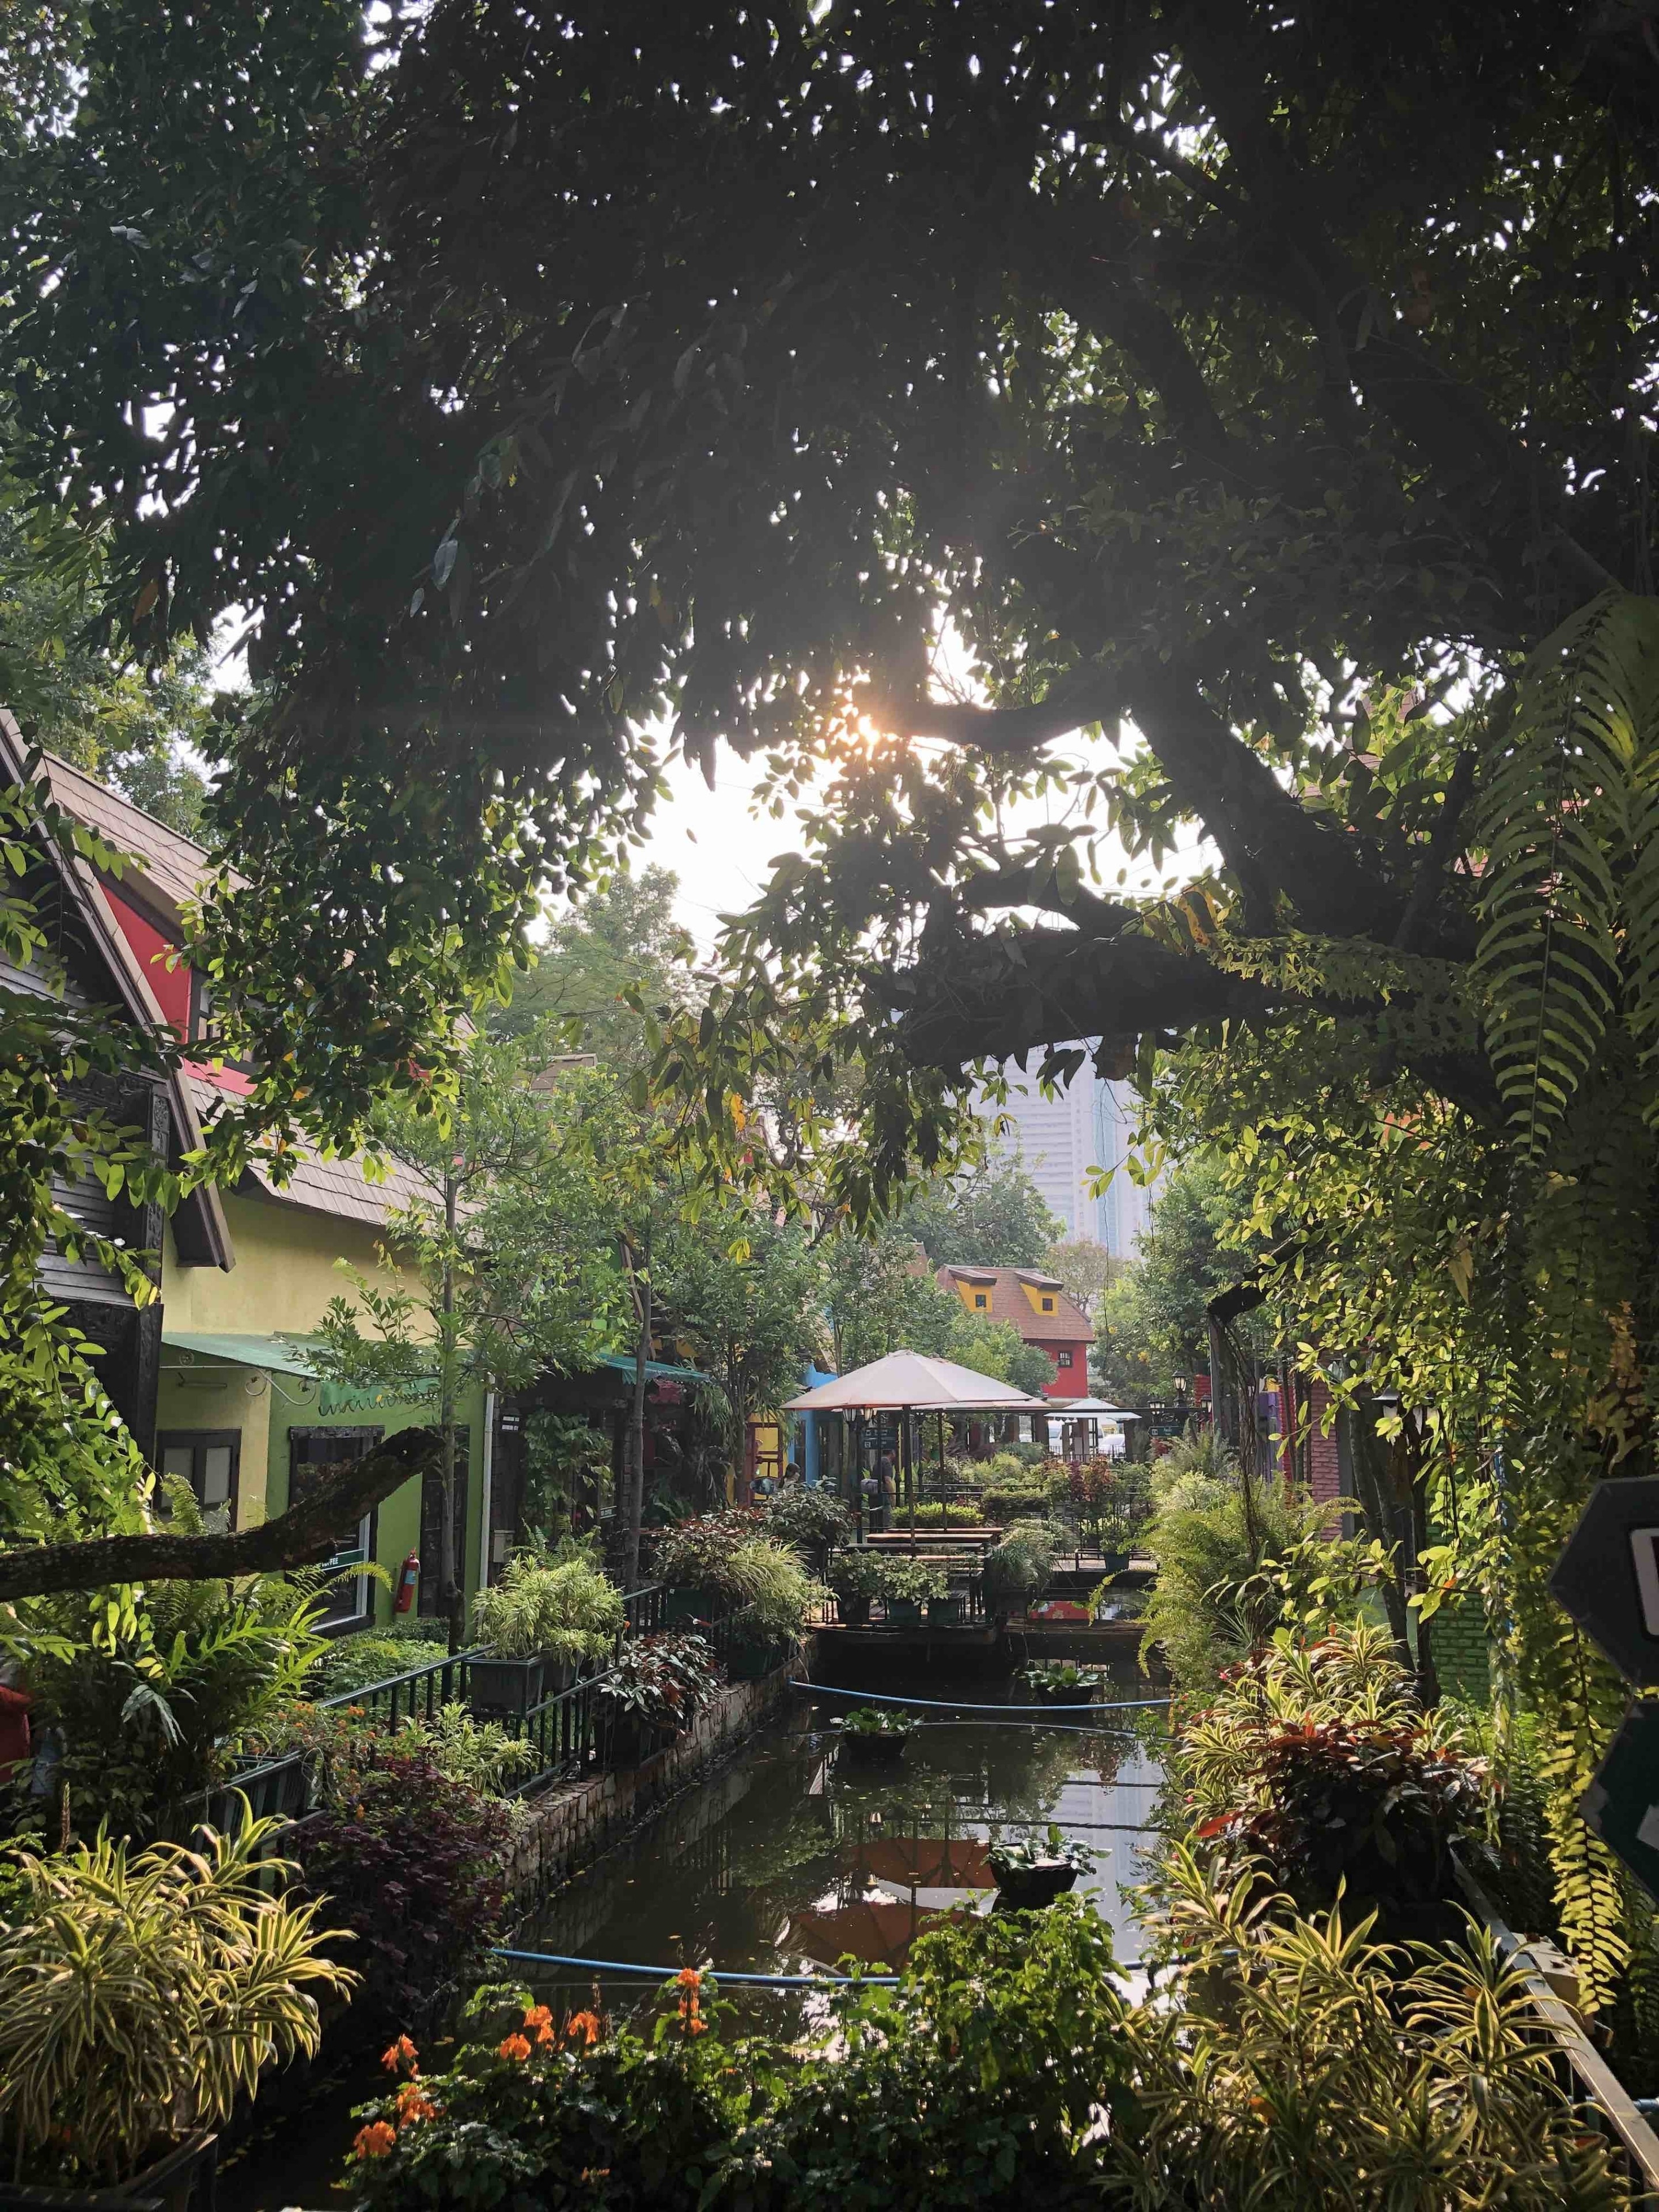 Before watching the Mimosa Cabaret Show in Pattaya, take a walk around its surroundings...